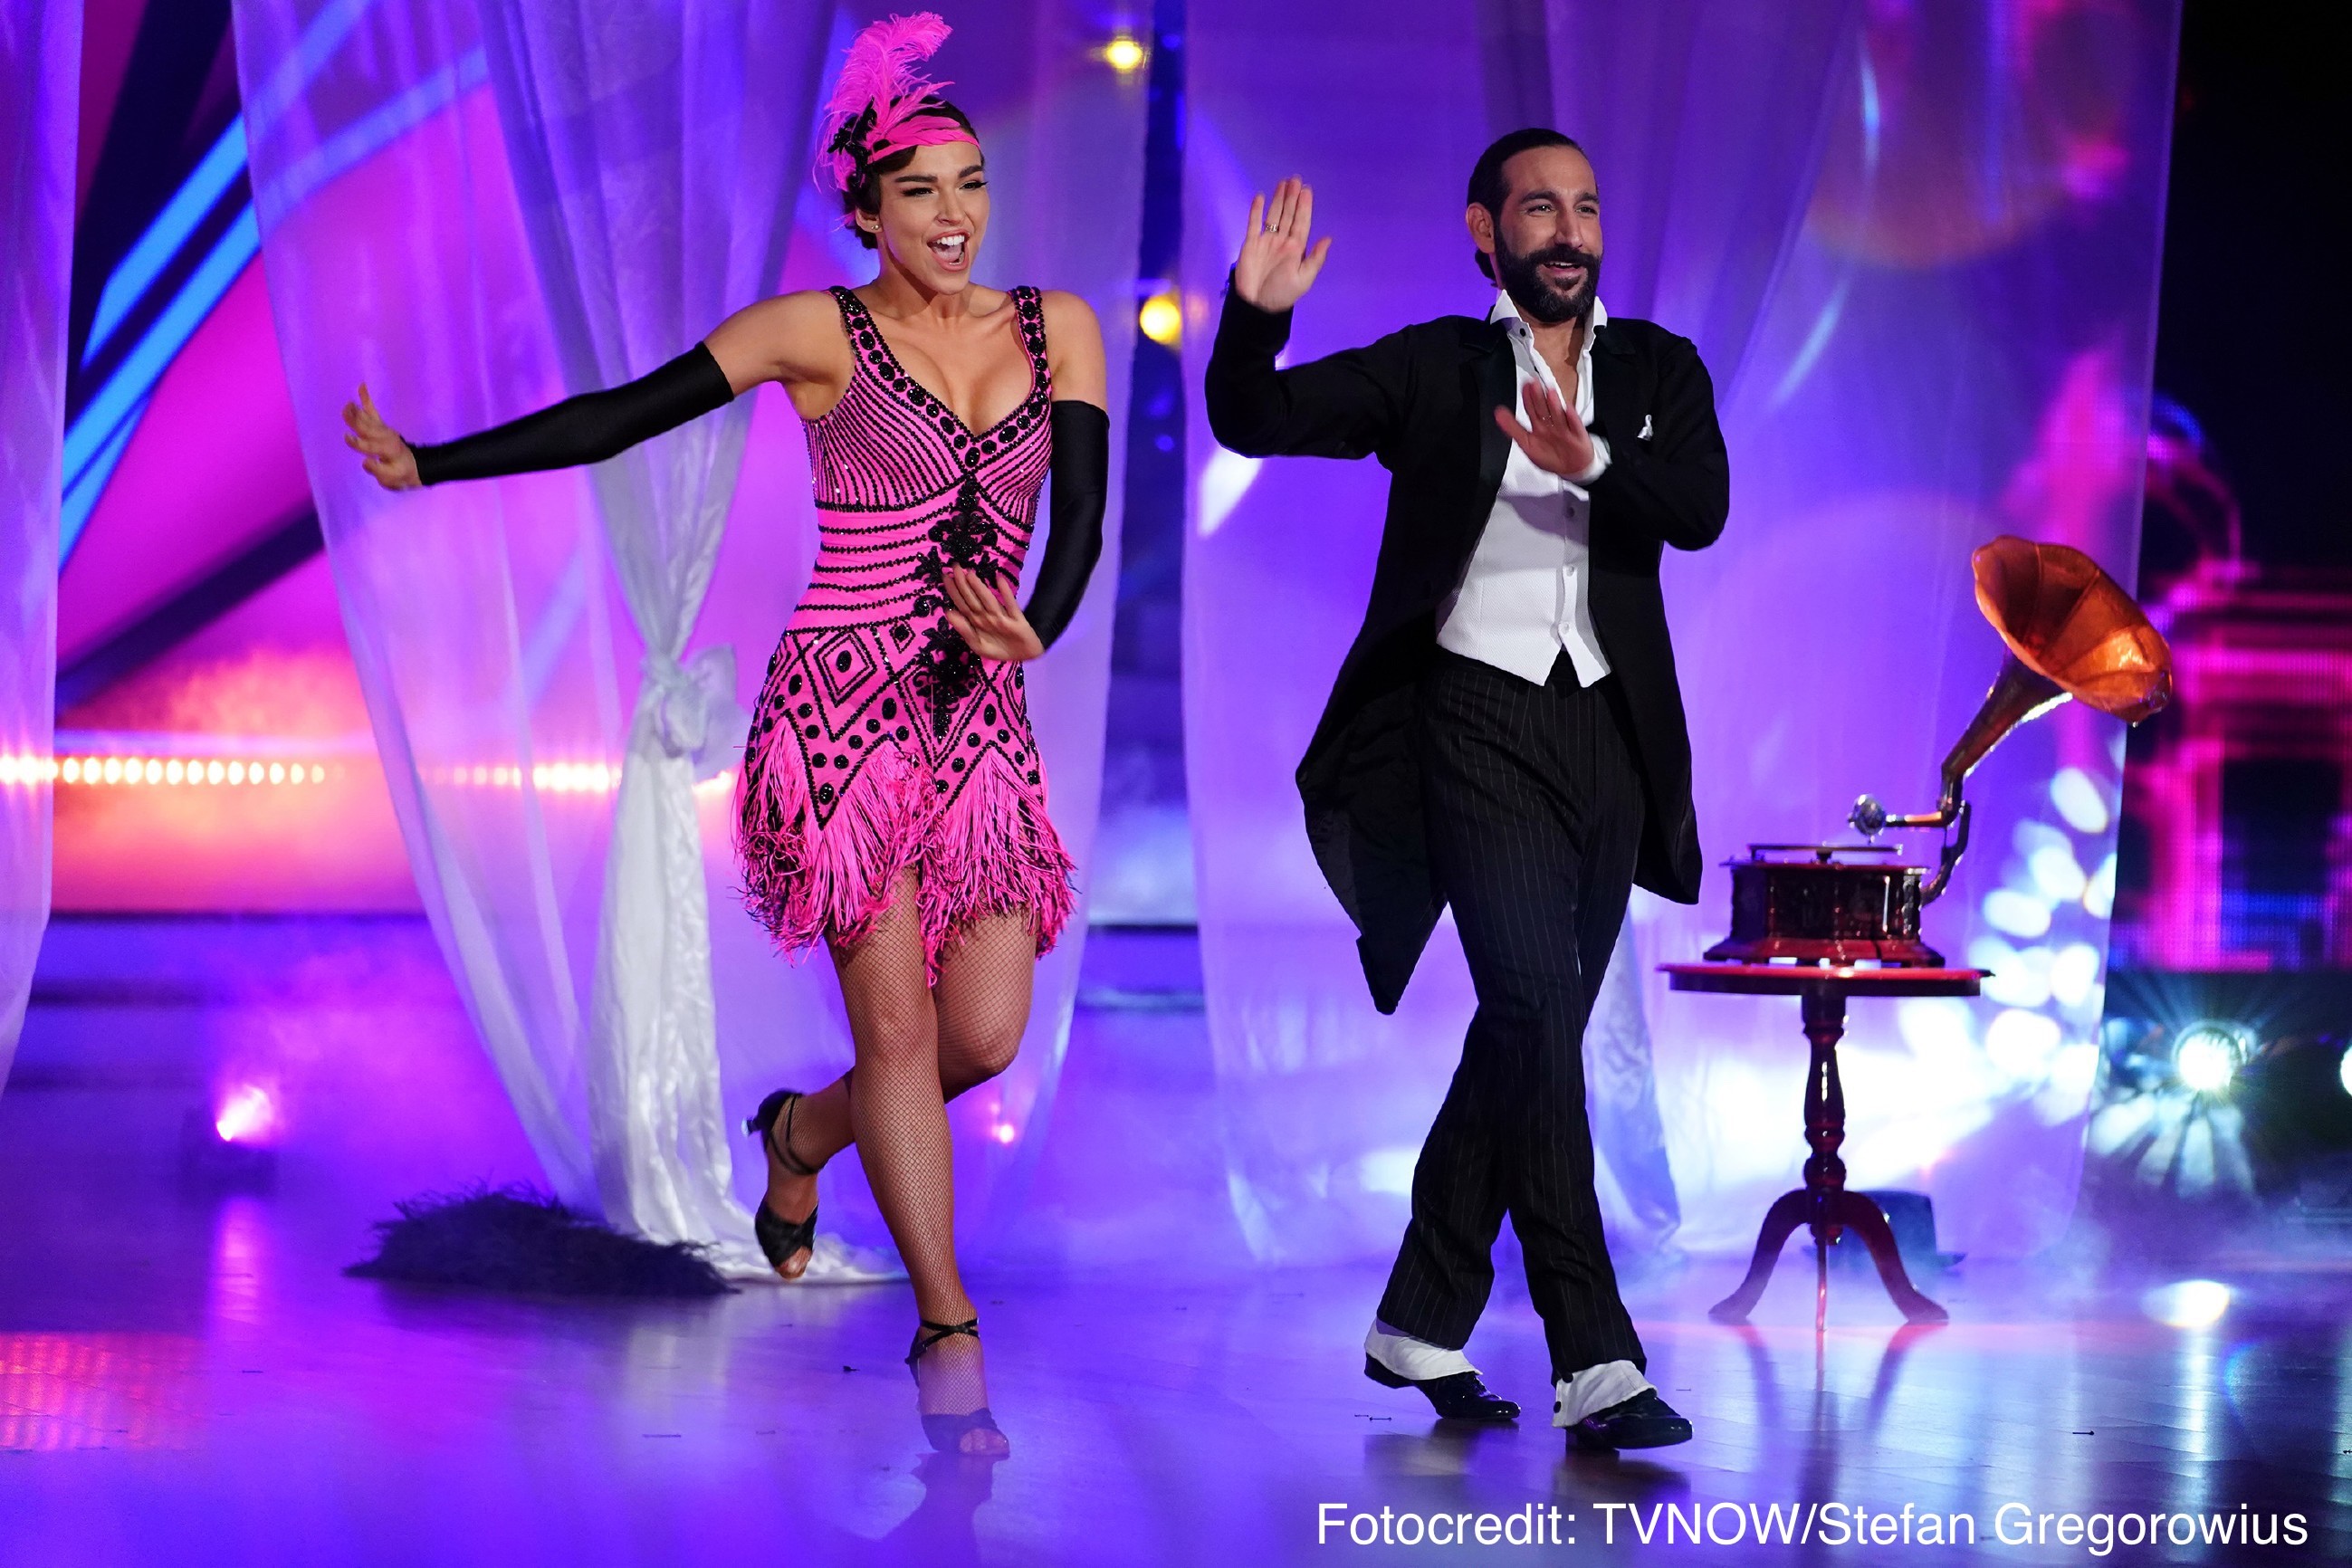  Lili Paul-Roncalli und Massimo Sinató bei RTL Let's Dance 2020 Folge 9